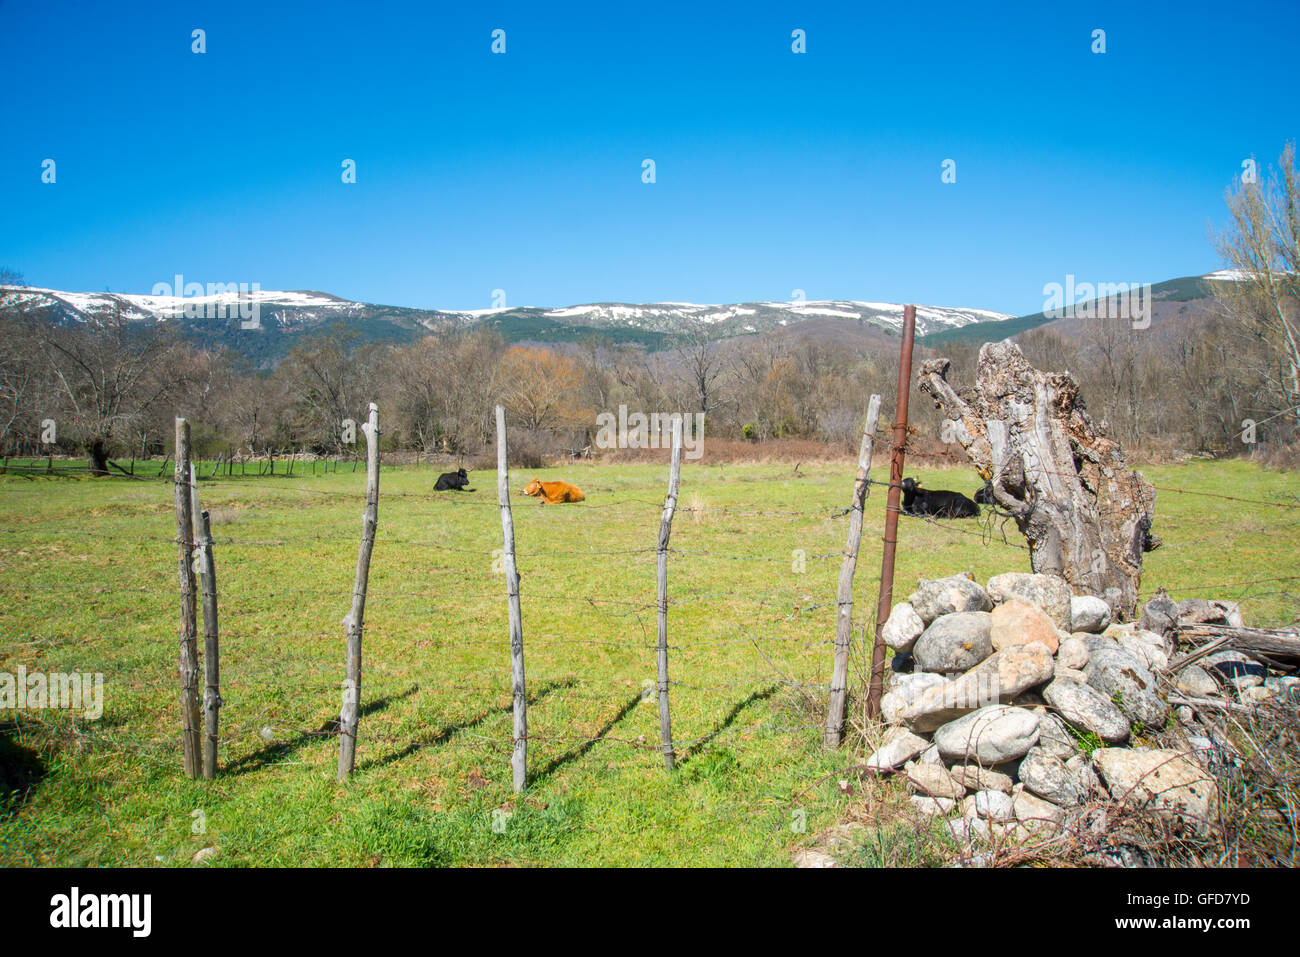 Wiese und Kühe. Nationalpark Sierra de Guadarrama, Rascafria, Provinz Madrid, Spanien. Stockfoto